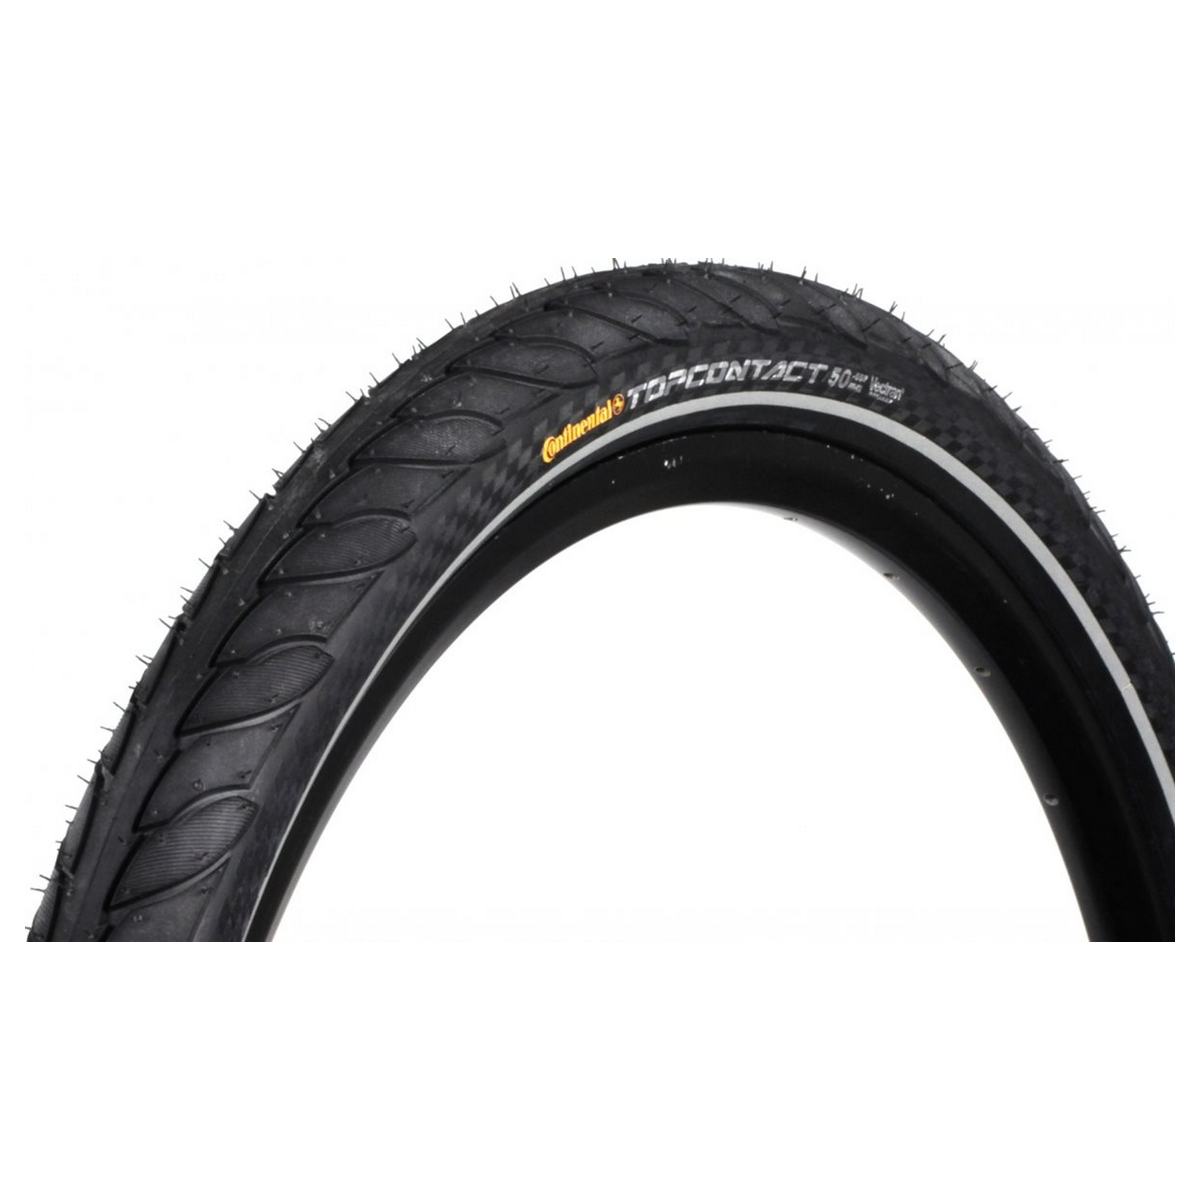 Tire Top Contact II 32-622 (700x32) Reflex Folding Black